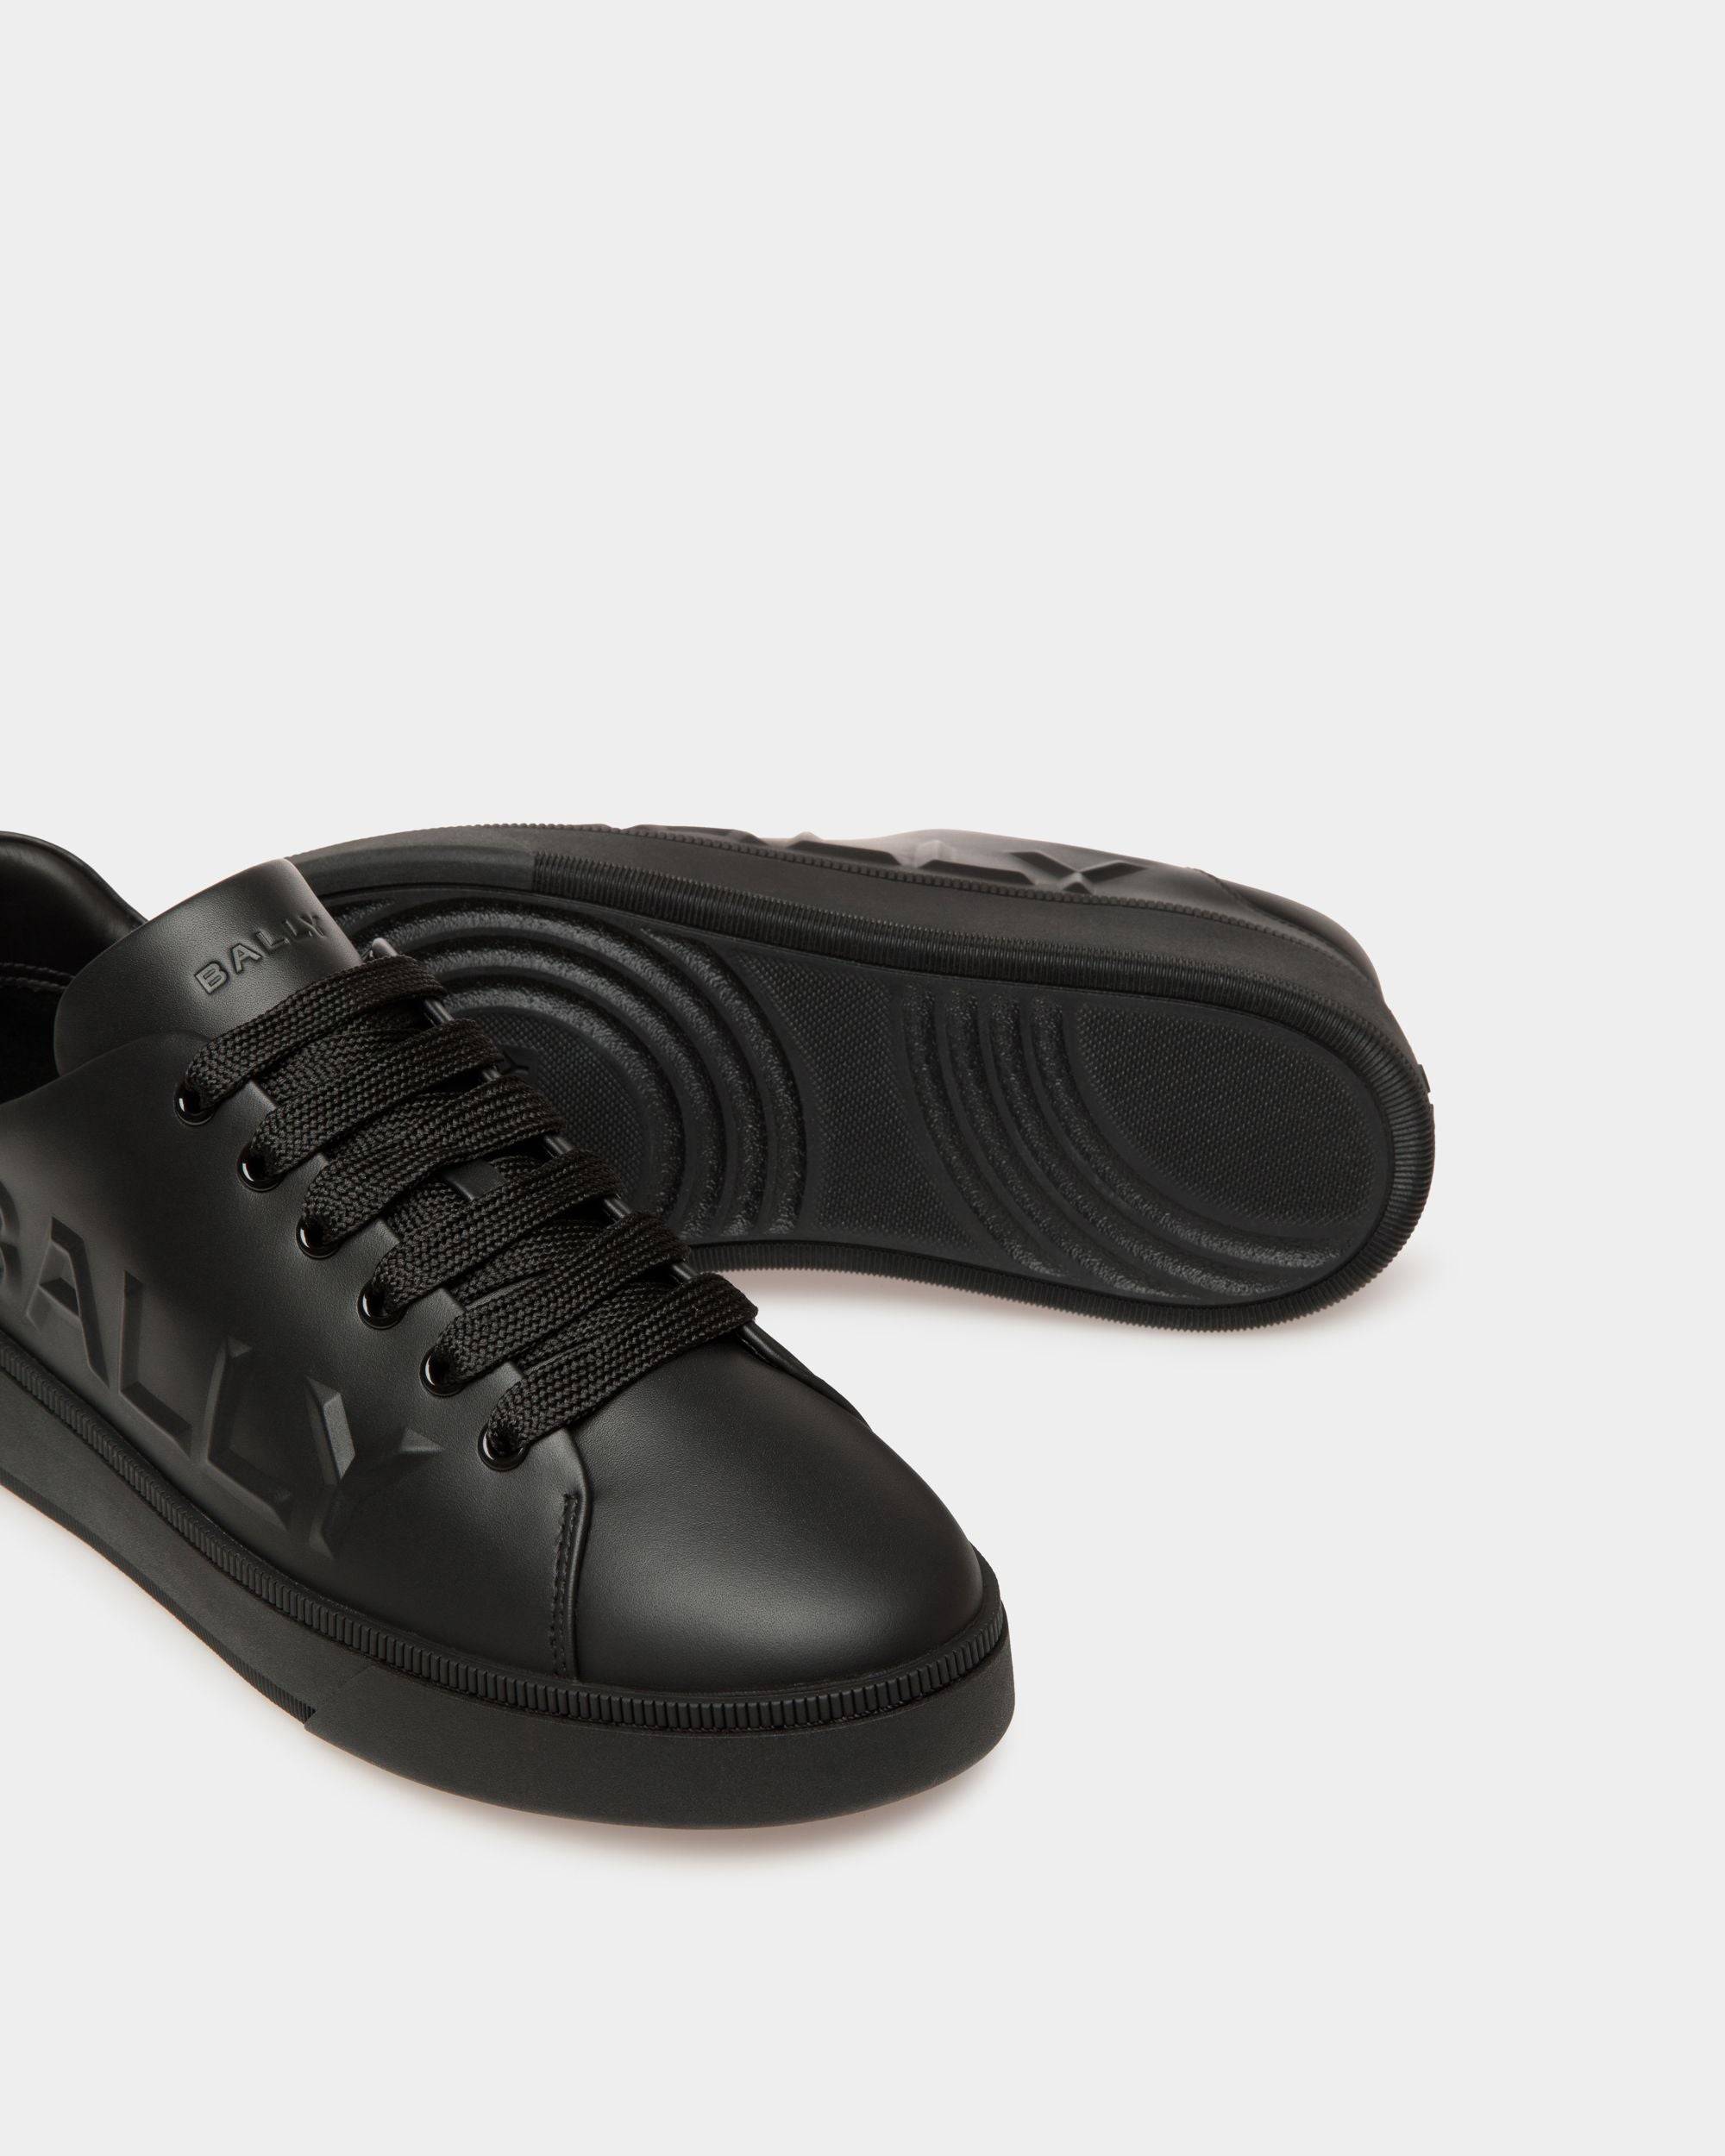 Raise | Herren-Sneaker aus schwarzem Leder | Bally | Still Life Unten